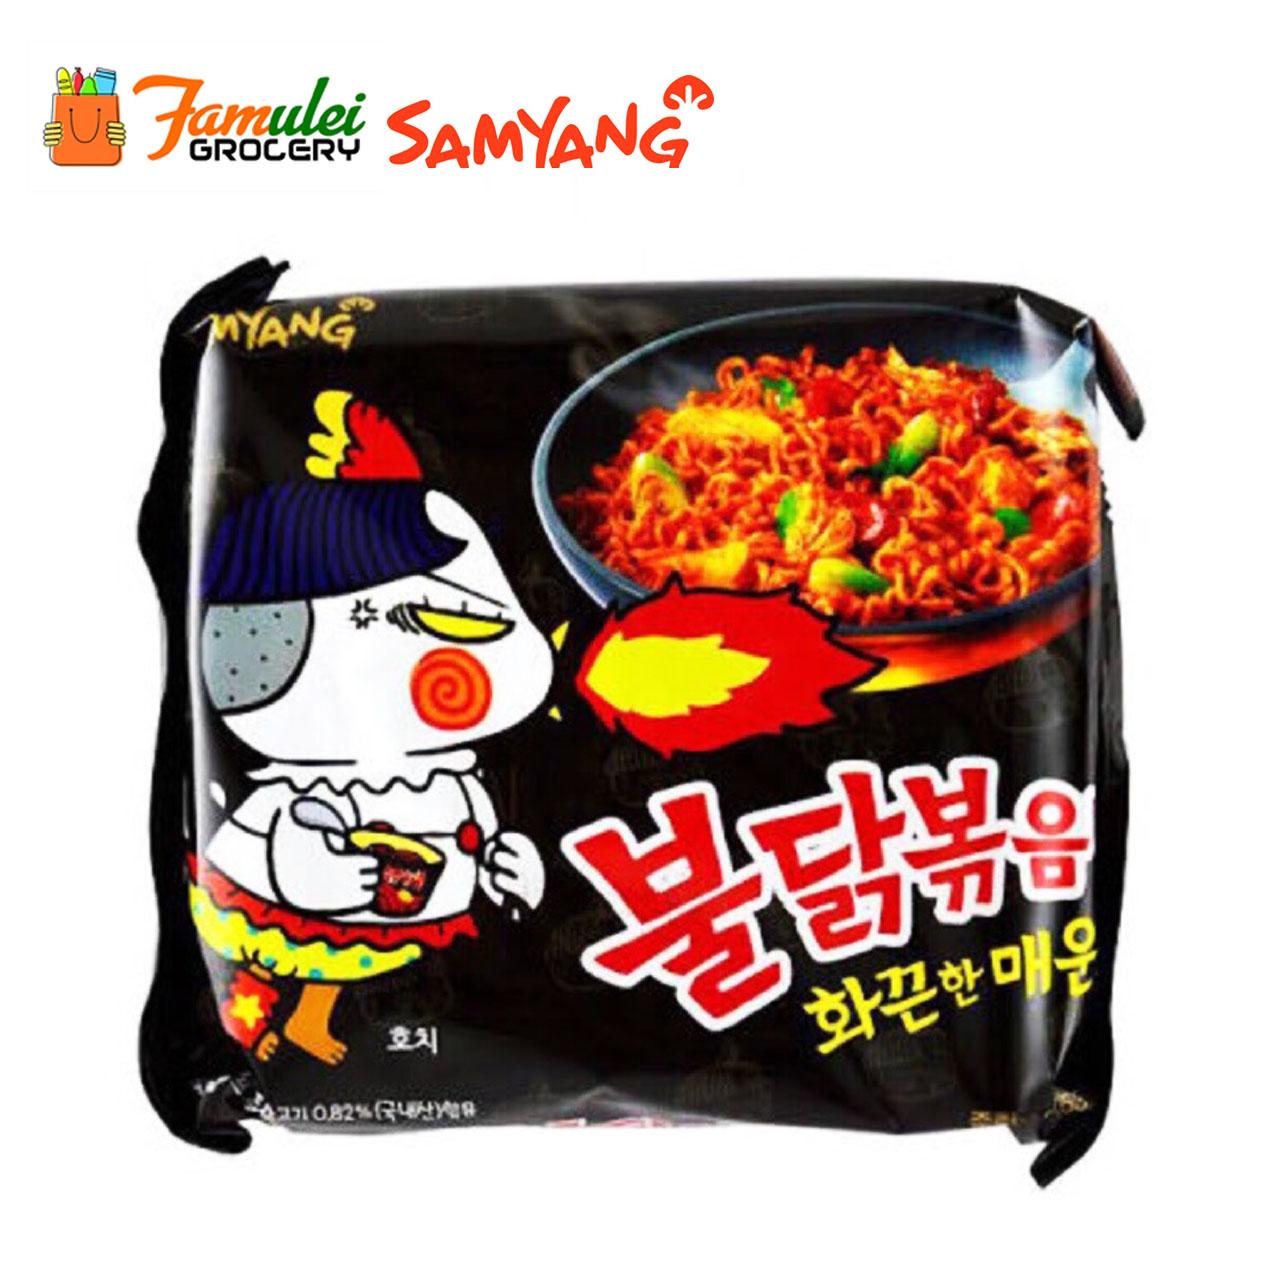 Samyang лапша быстрого. Samyang x2 рамен. Samyang Buldak 2x Spicy соус. Корейская лапша 2x Spicy. Instant Ramen Noodles Samyang лапша 2х.